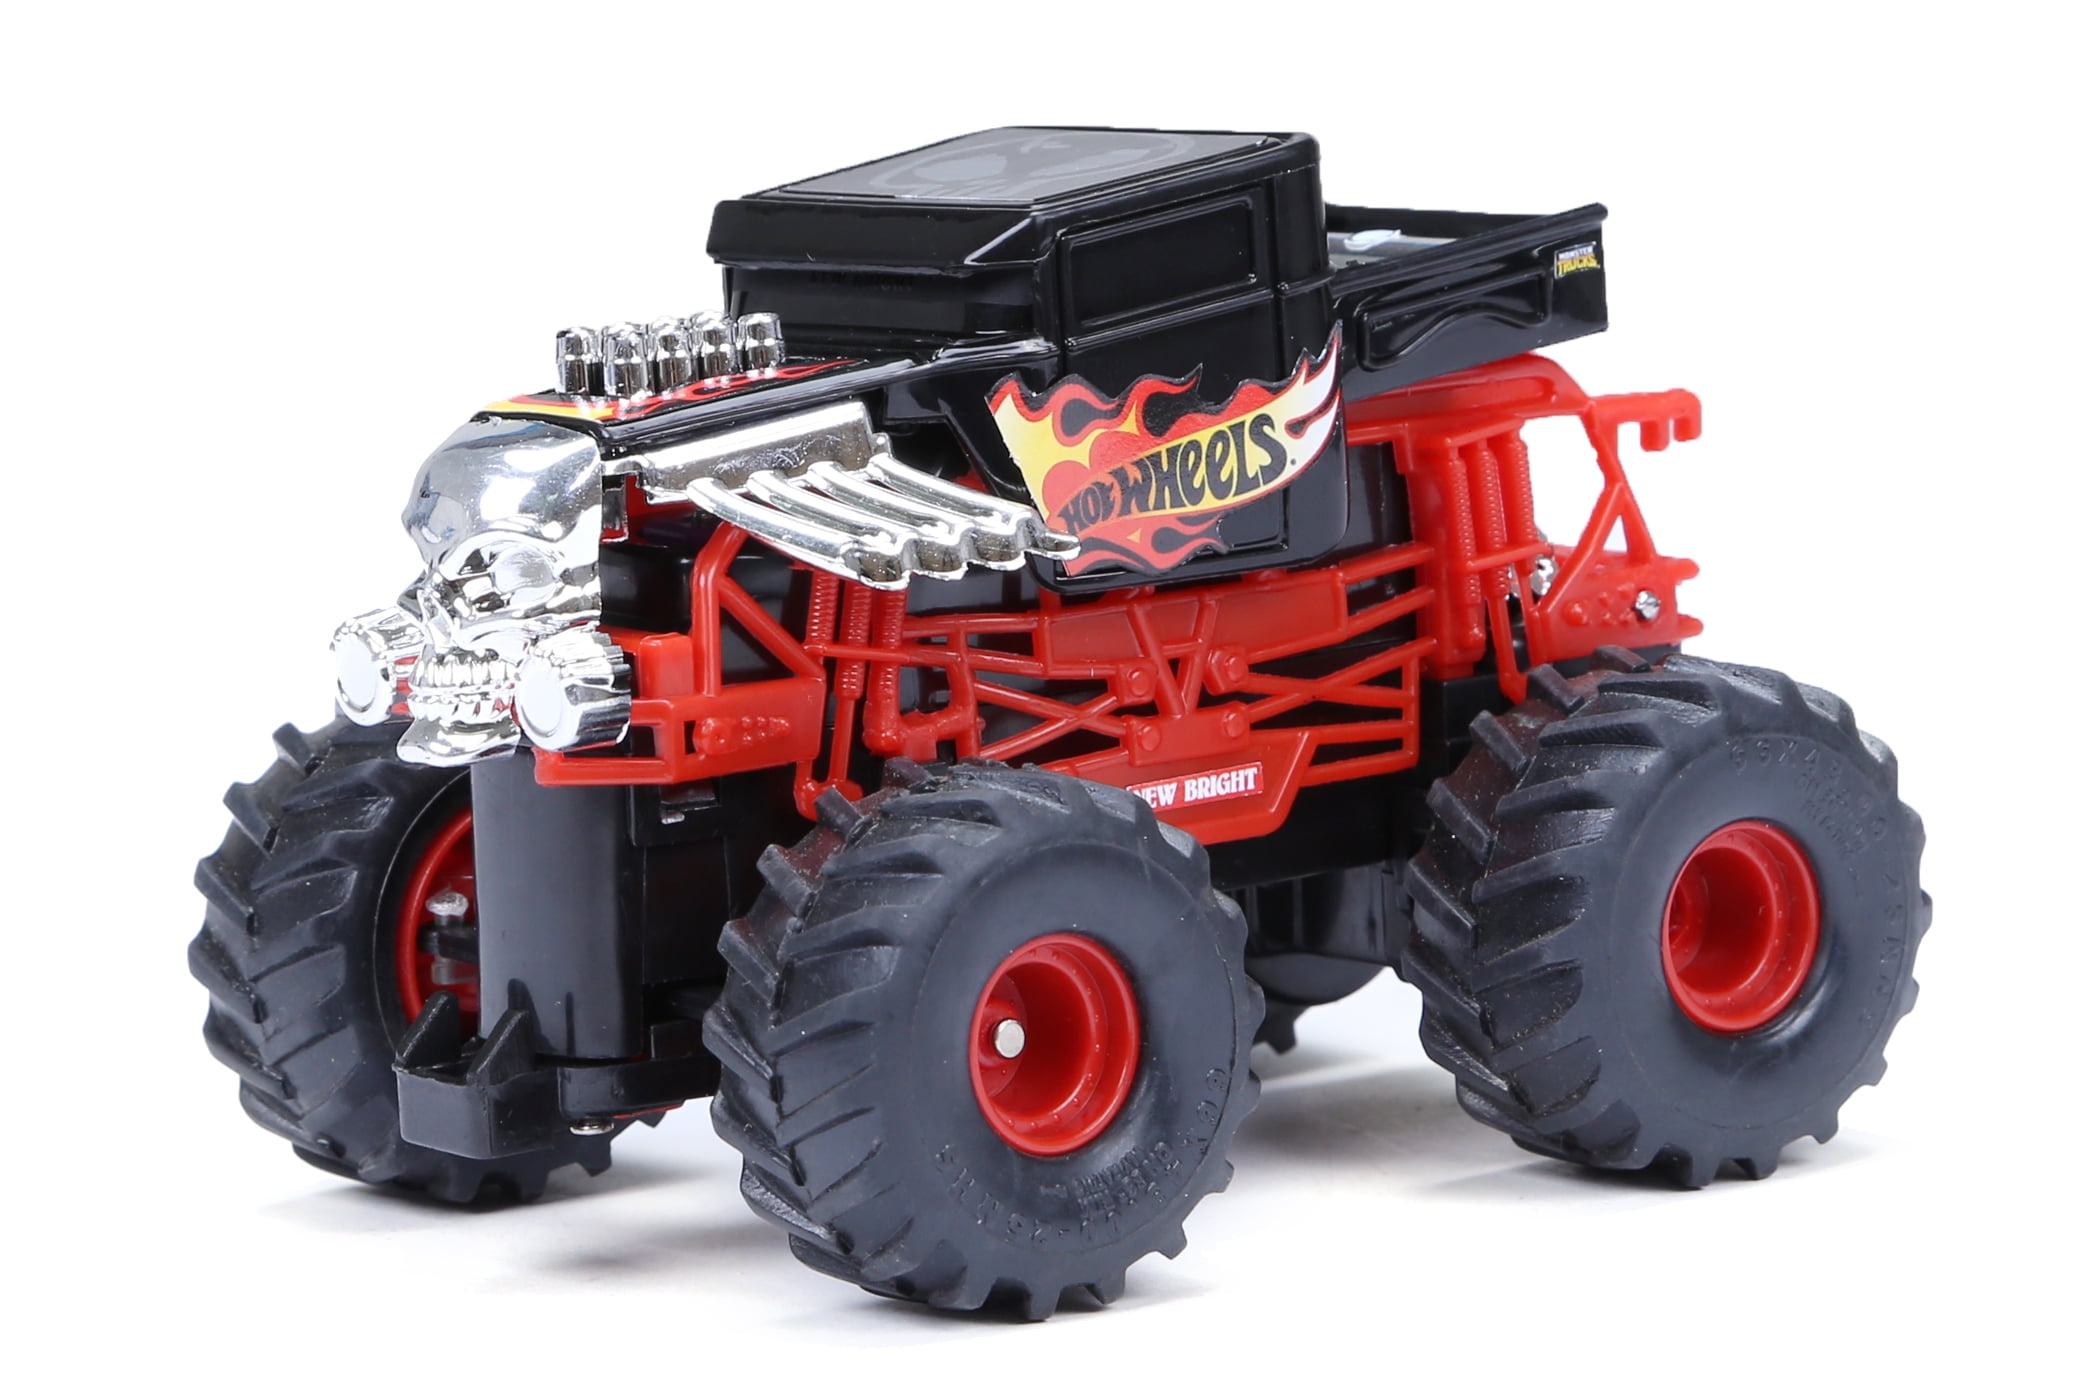 Mondo 63679 RC Monster Truck Bone Shaker 17 Motors Remote Control Car for  Kids 2.4 GHz-Red/Black-63679, Hot Wheels Livery